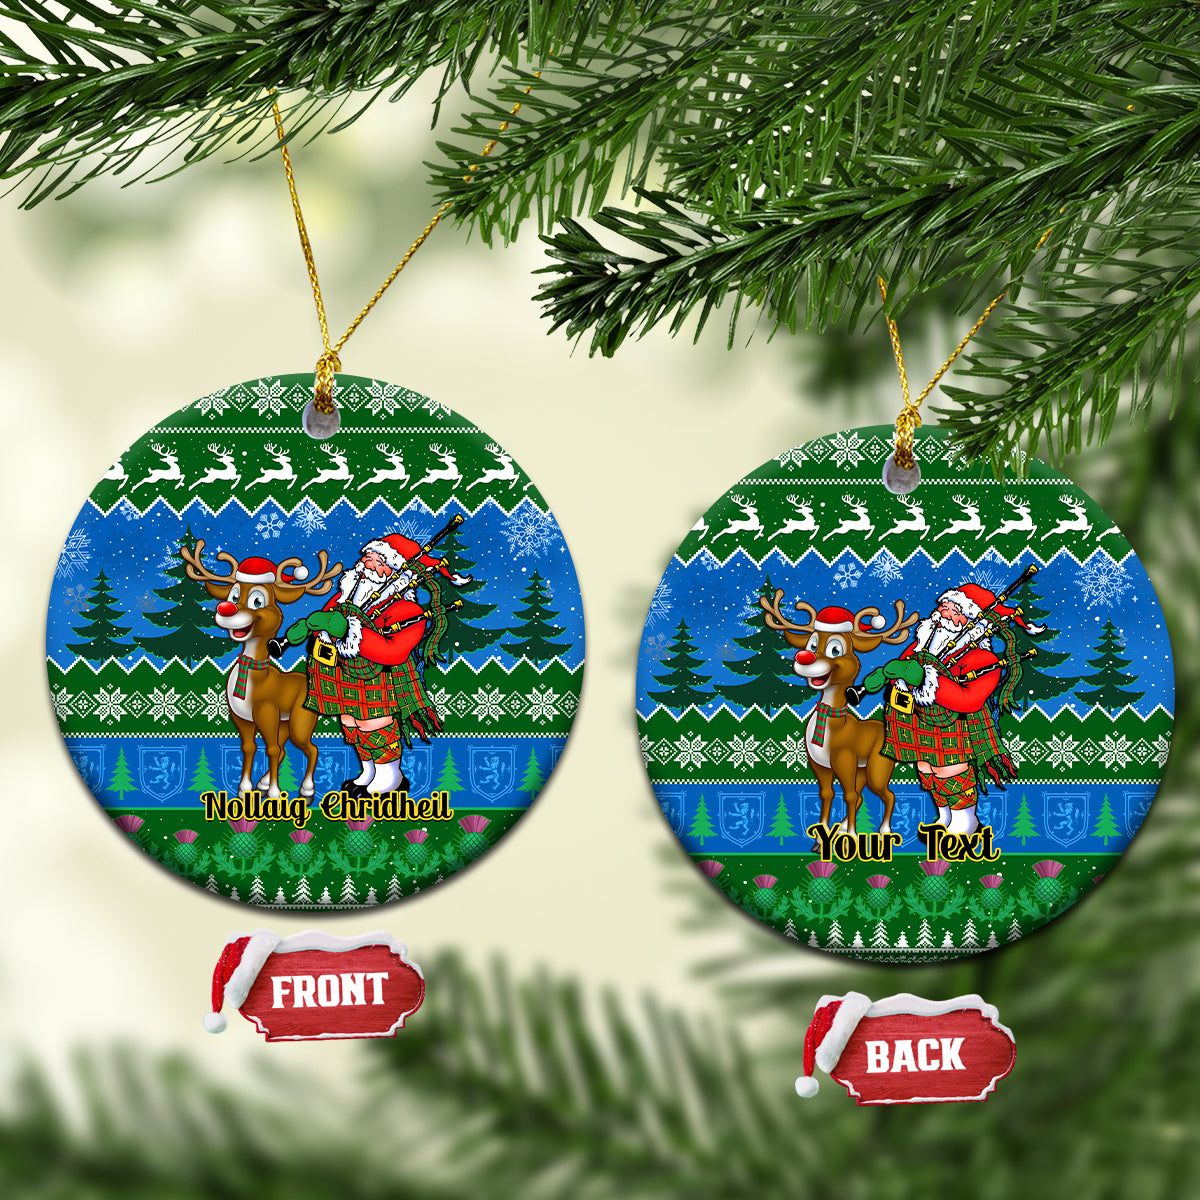 personalised-scotland-christmas-ceramic-ornament-scottish-santa-with-reindeer-nollaig-chridheil